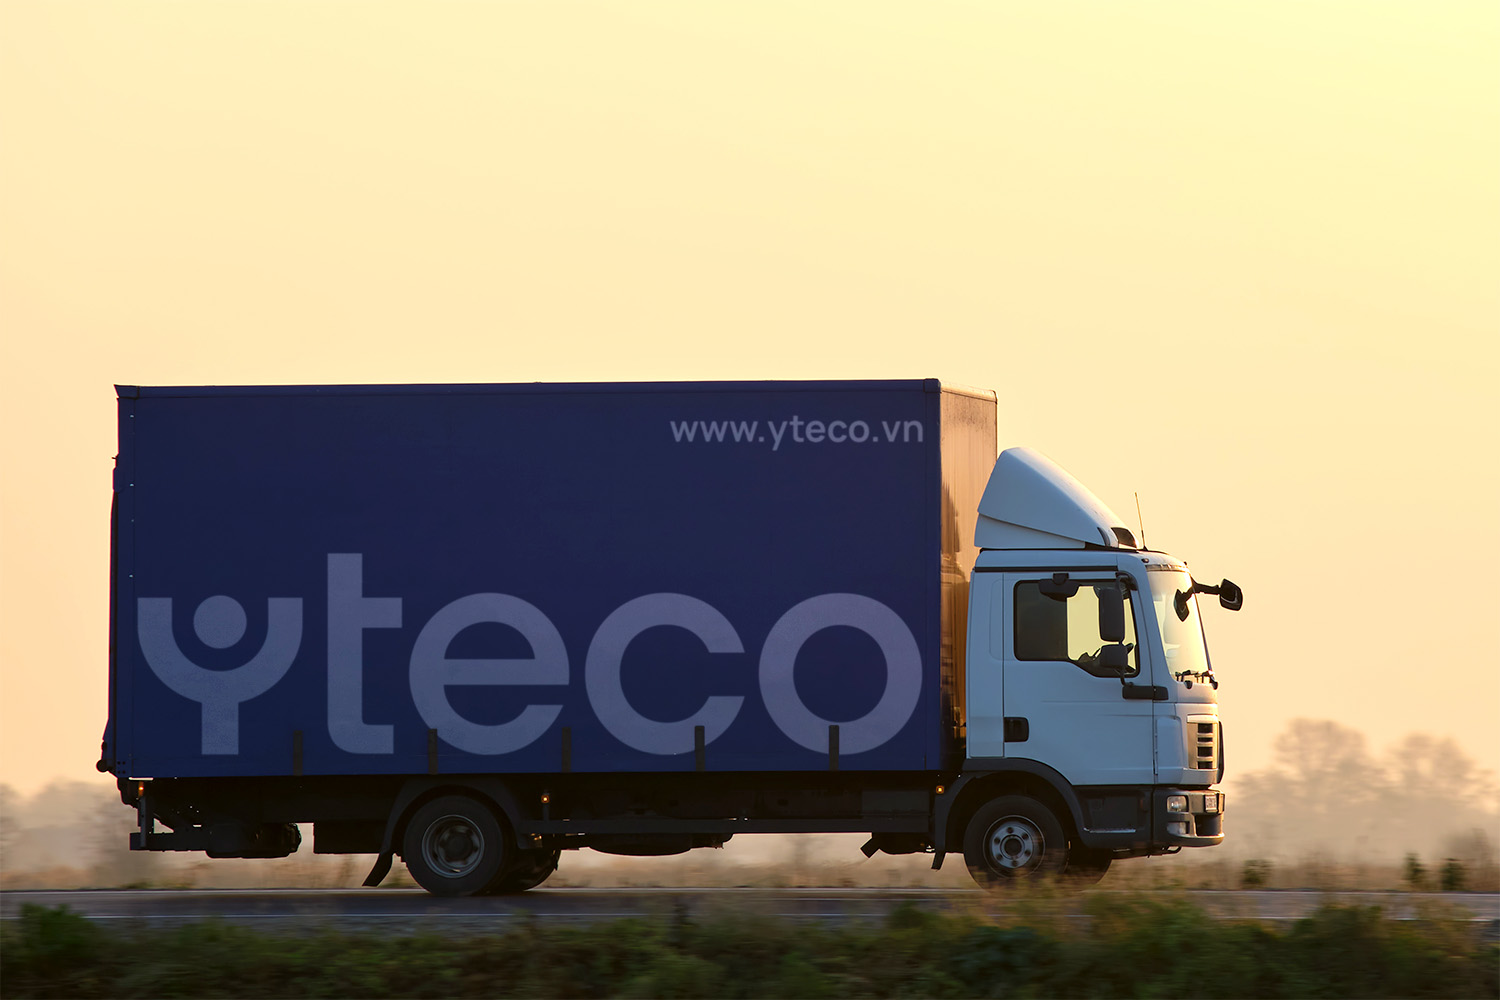 YTECO cargo on the way